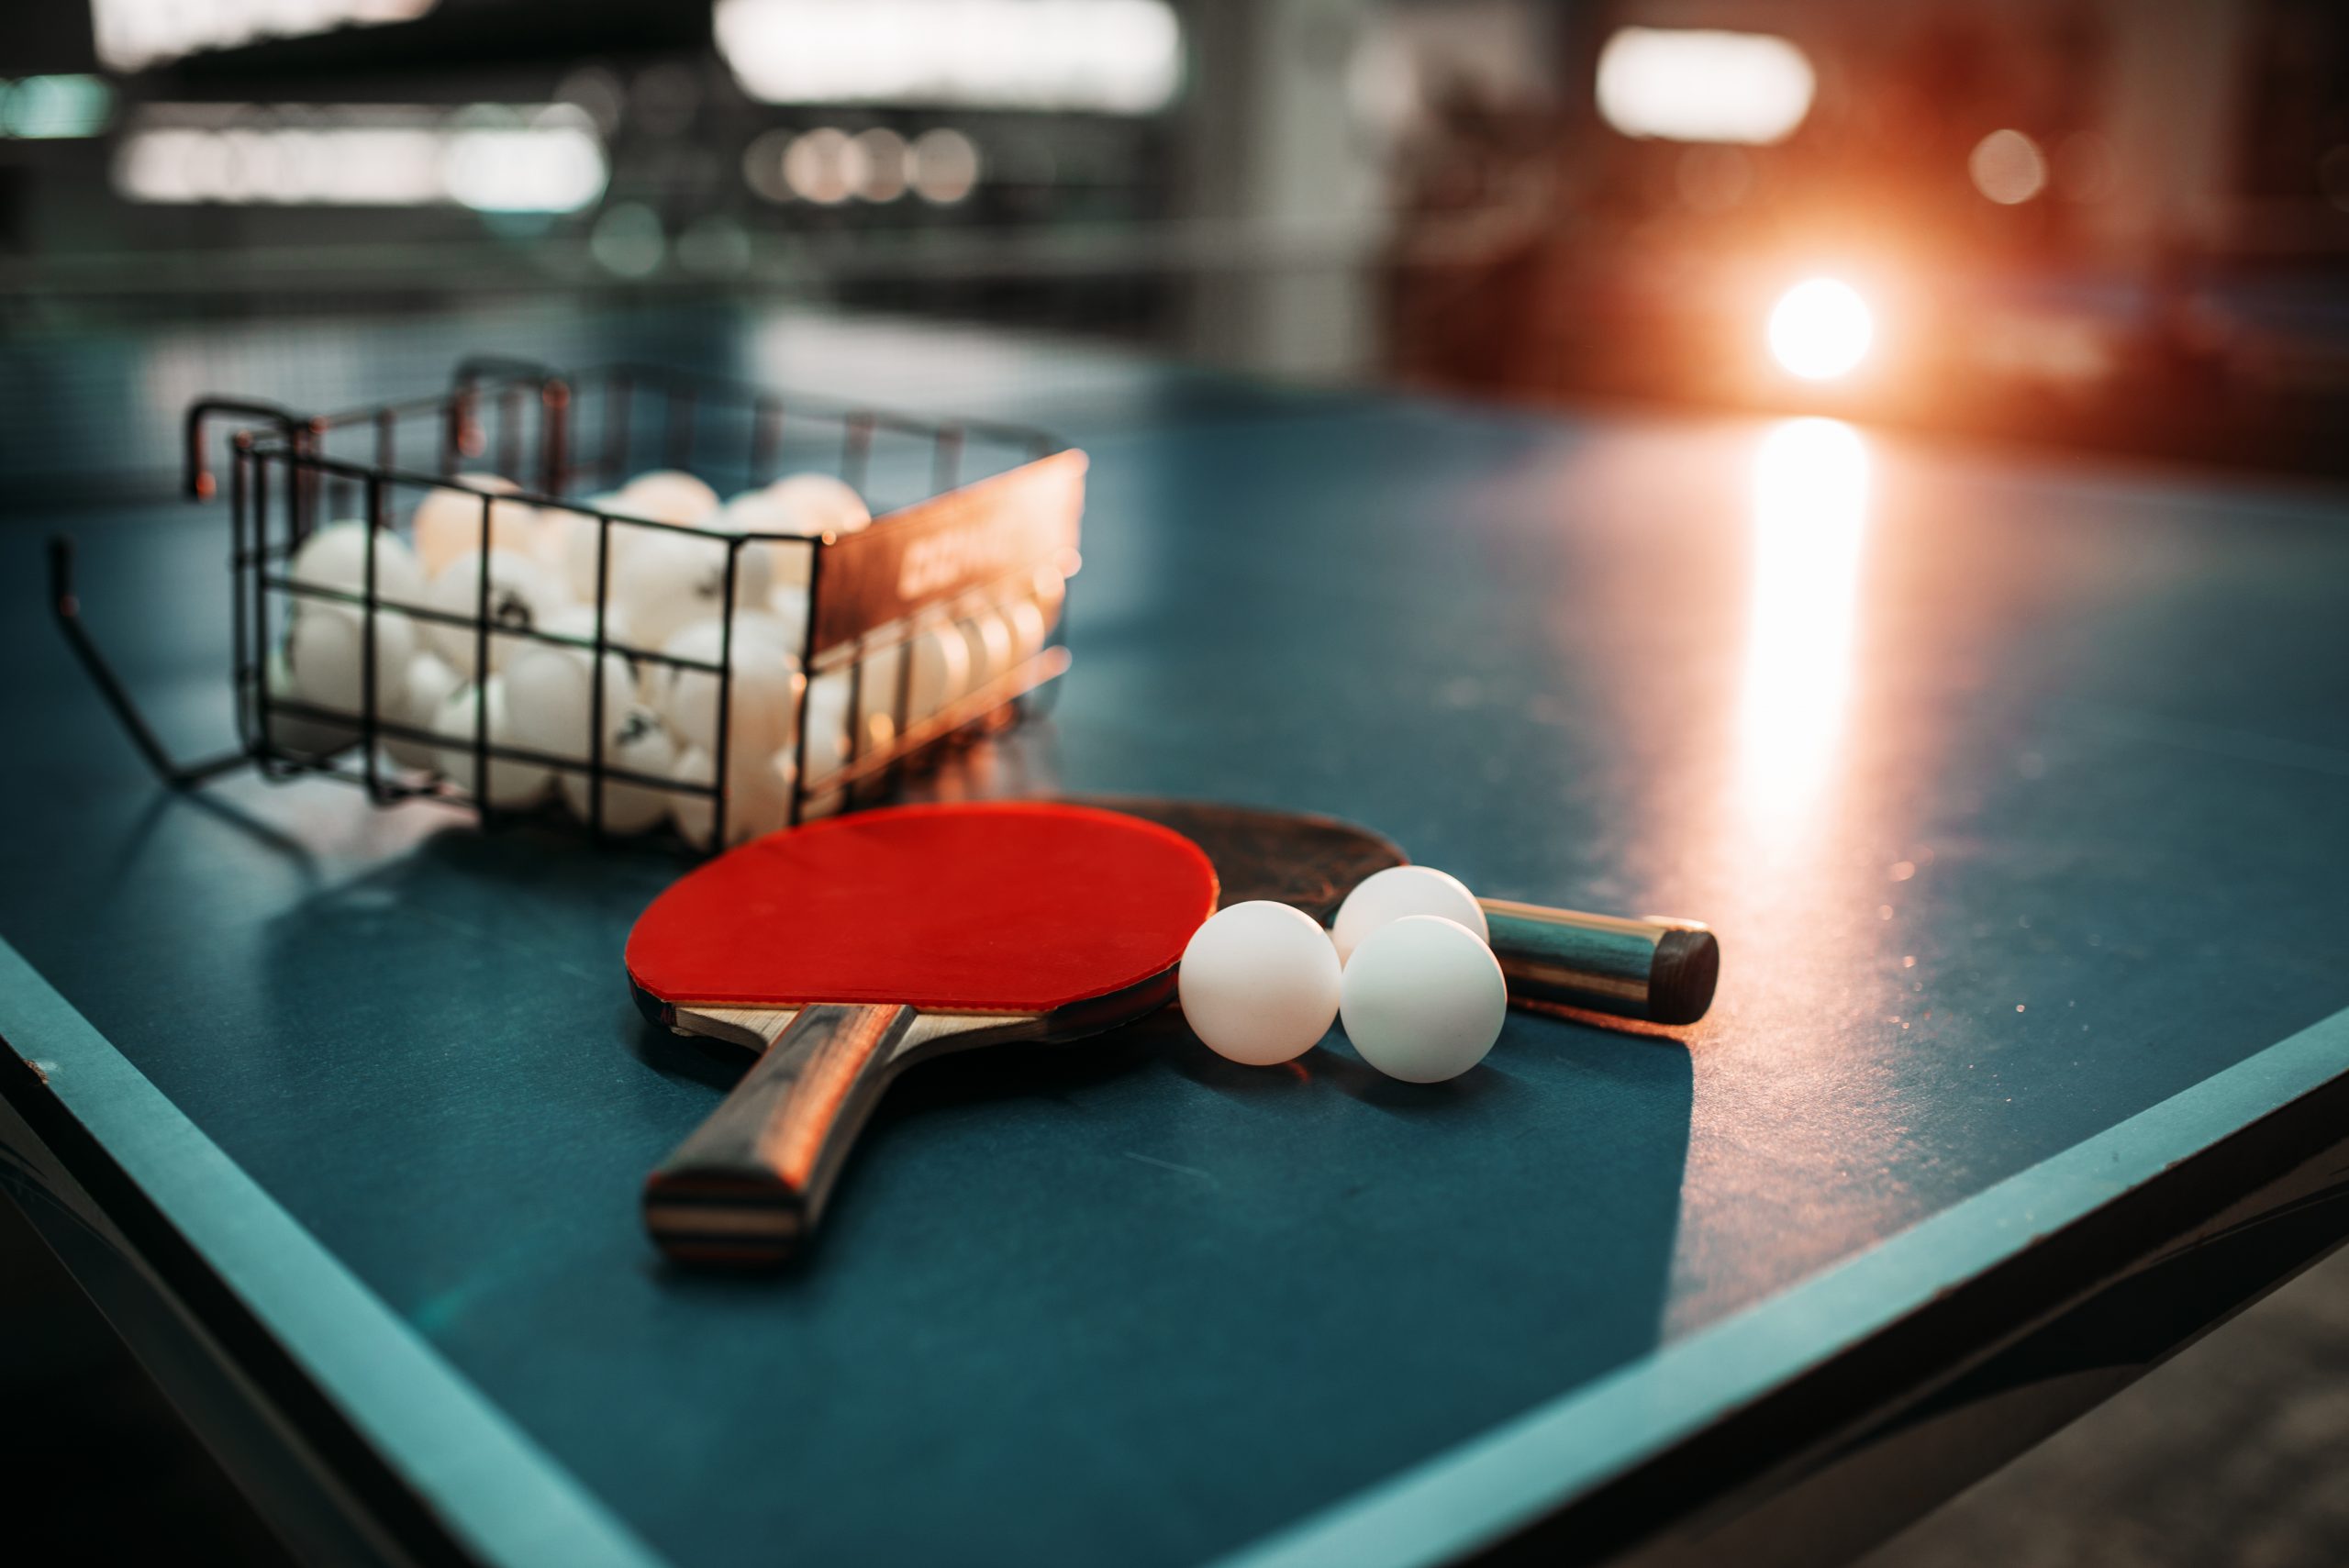 Regras do Tênis de Mesa - Como jogar Ping Pong